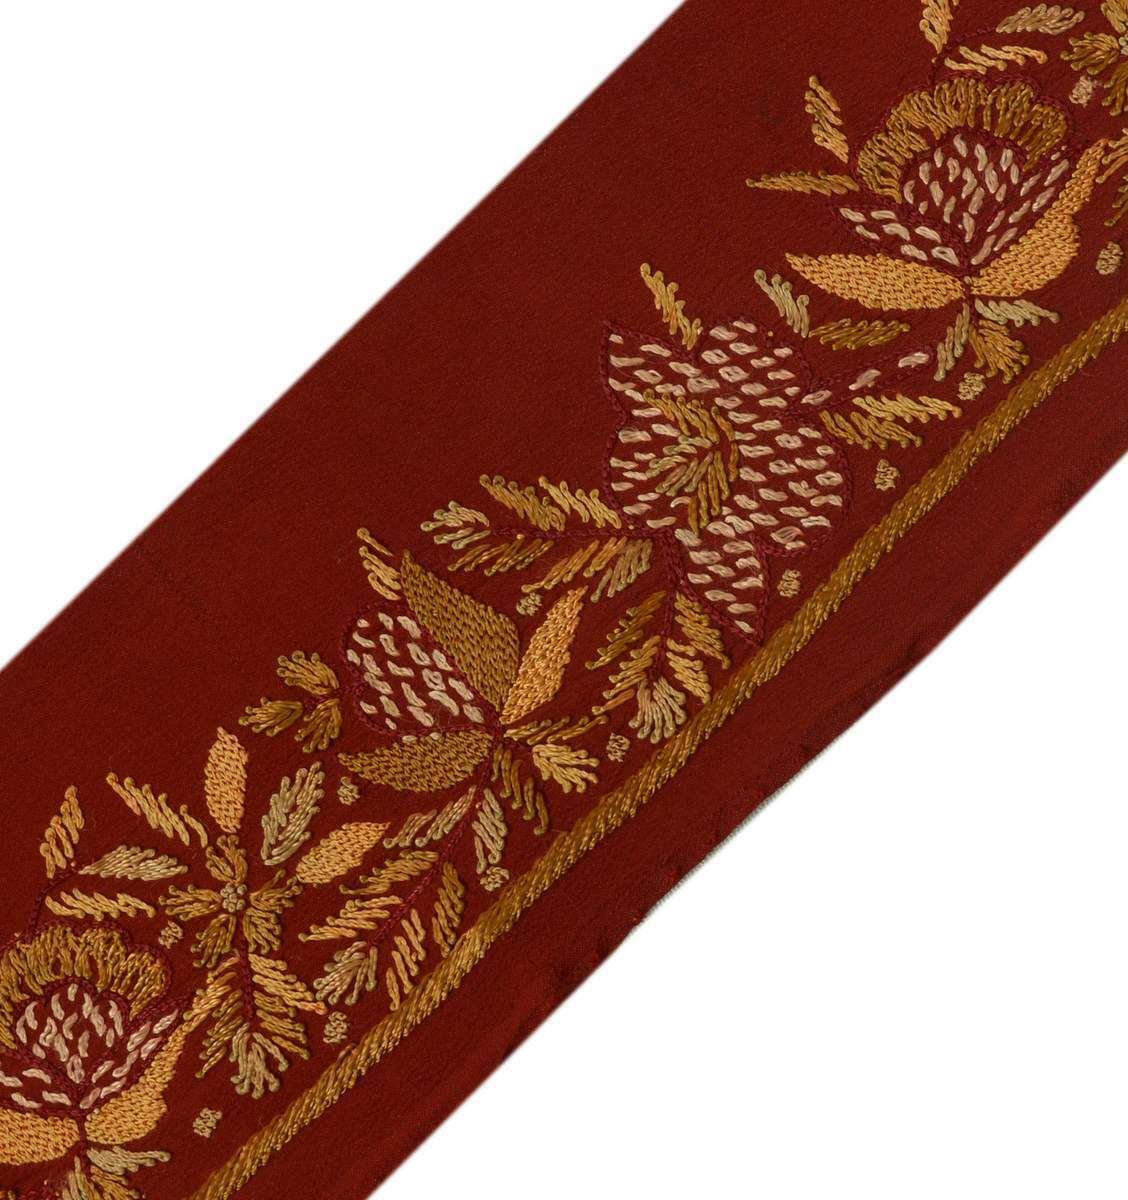 Antique Vintage Sari Border Indian Craft Trim Embroidered Maroon Lace Ribbon